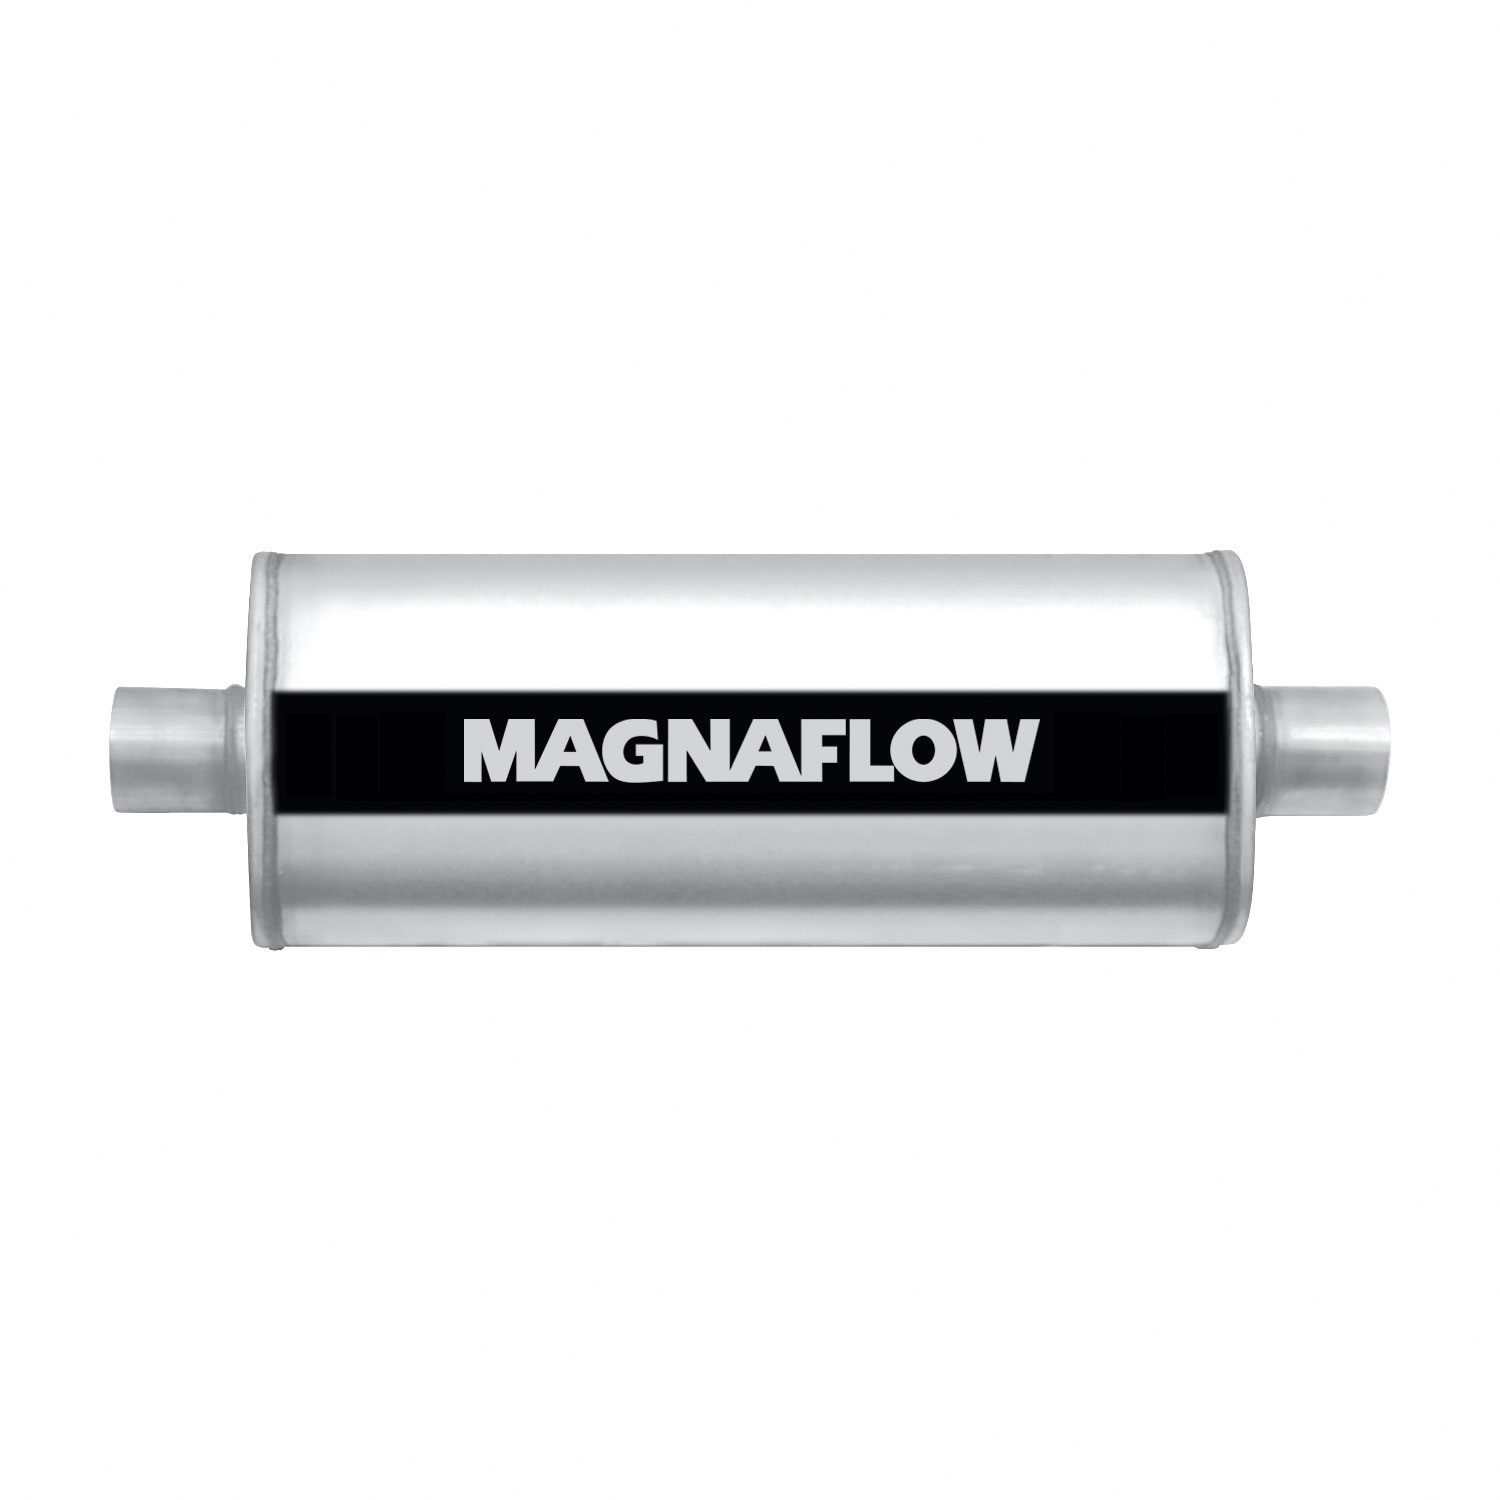 Magnaflow Performance Exhaust Magnaflow Performance Exhaust 12279 Stainless Steel Muffler